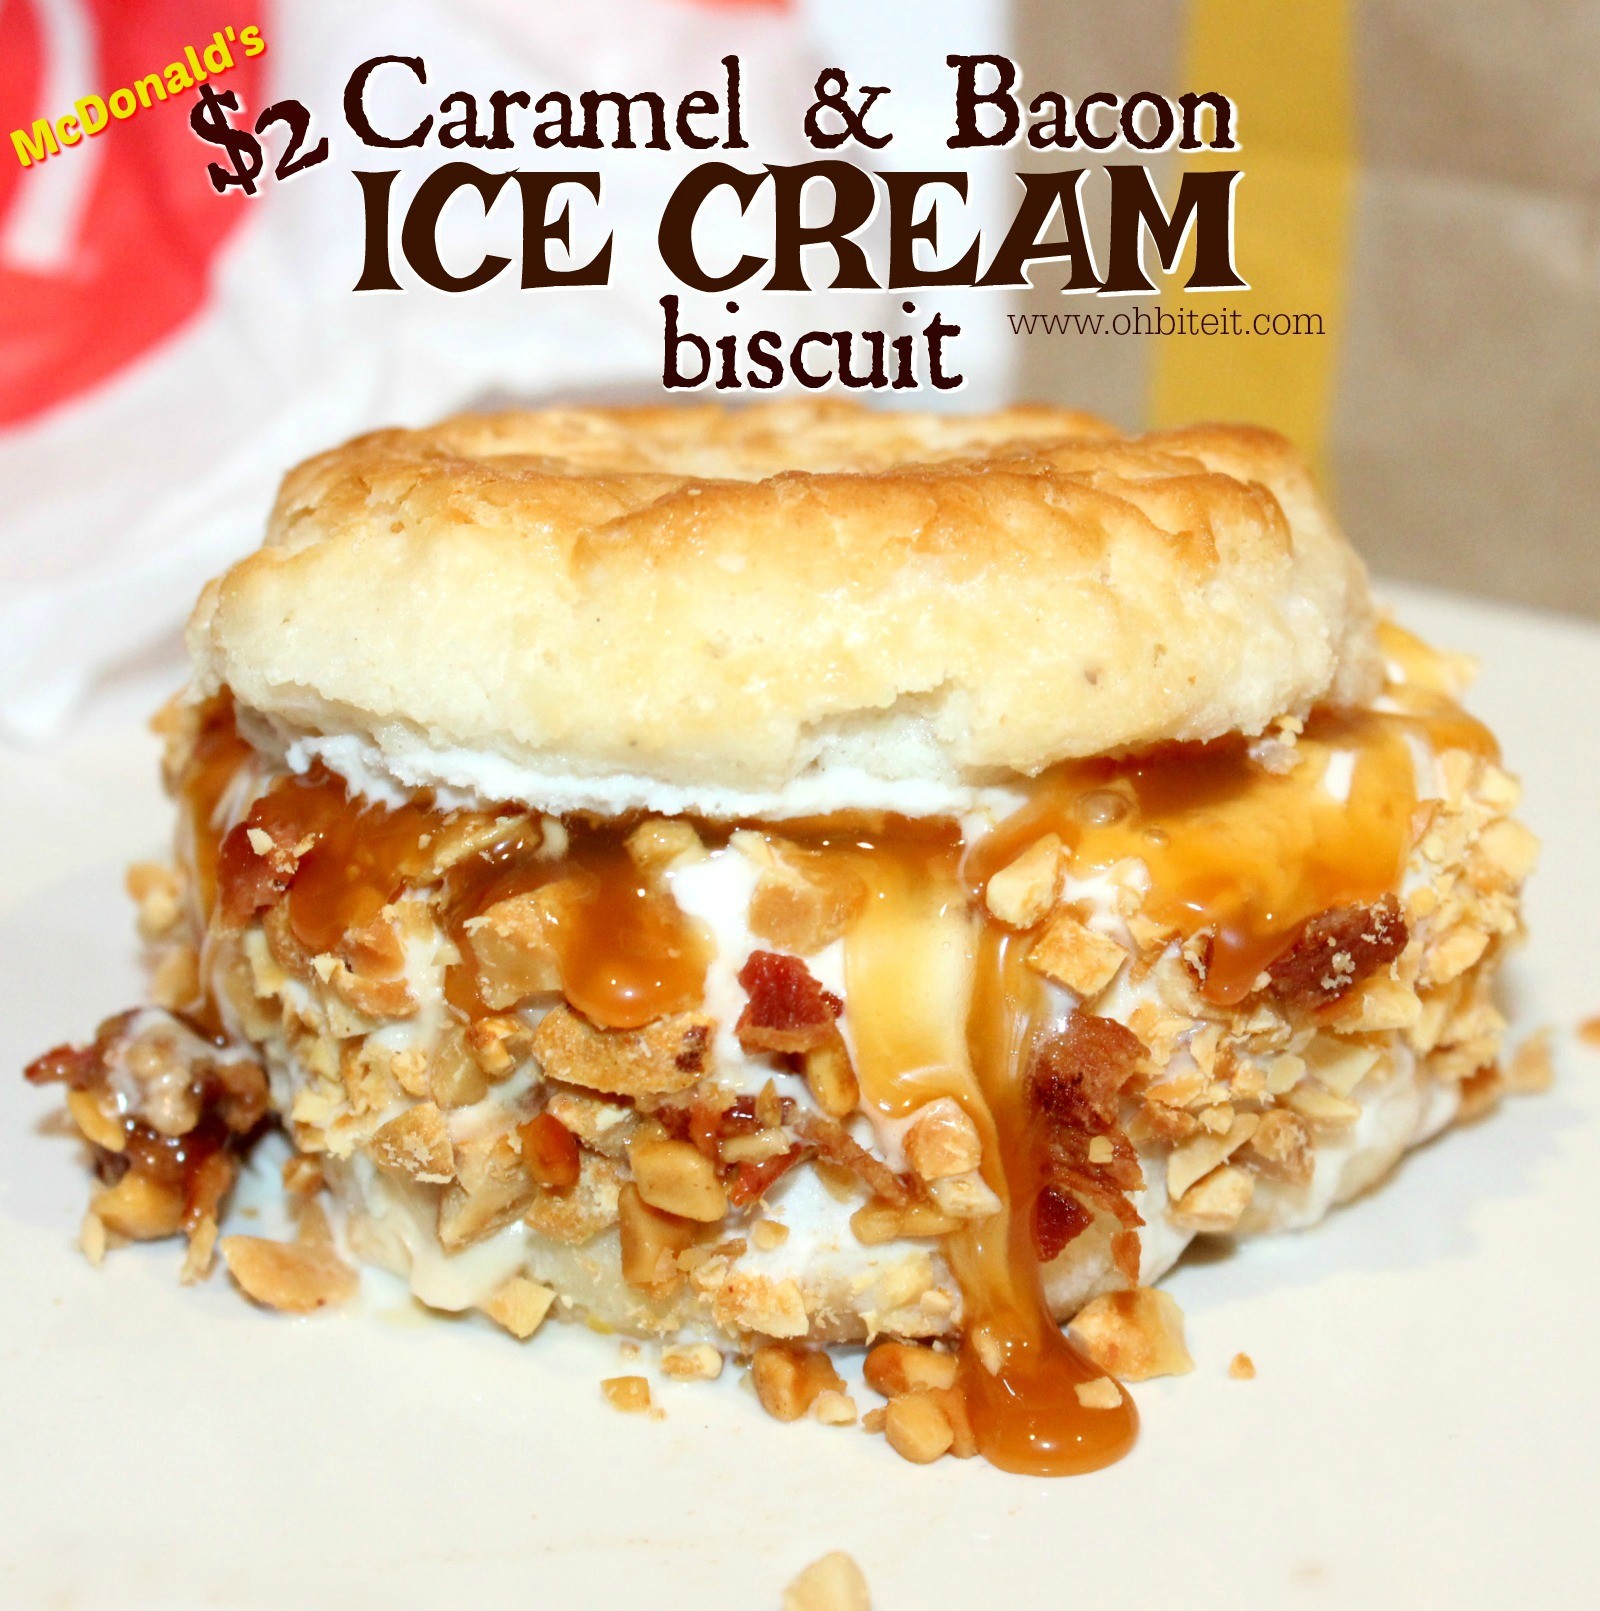 ~McDonald’s Caramel & Bacon Ice Cream Biscuit!